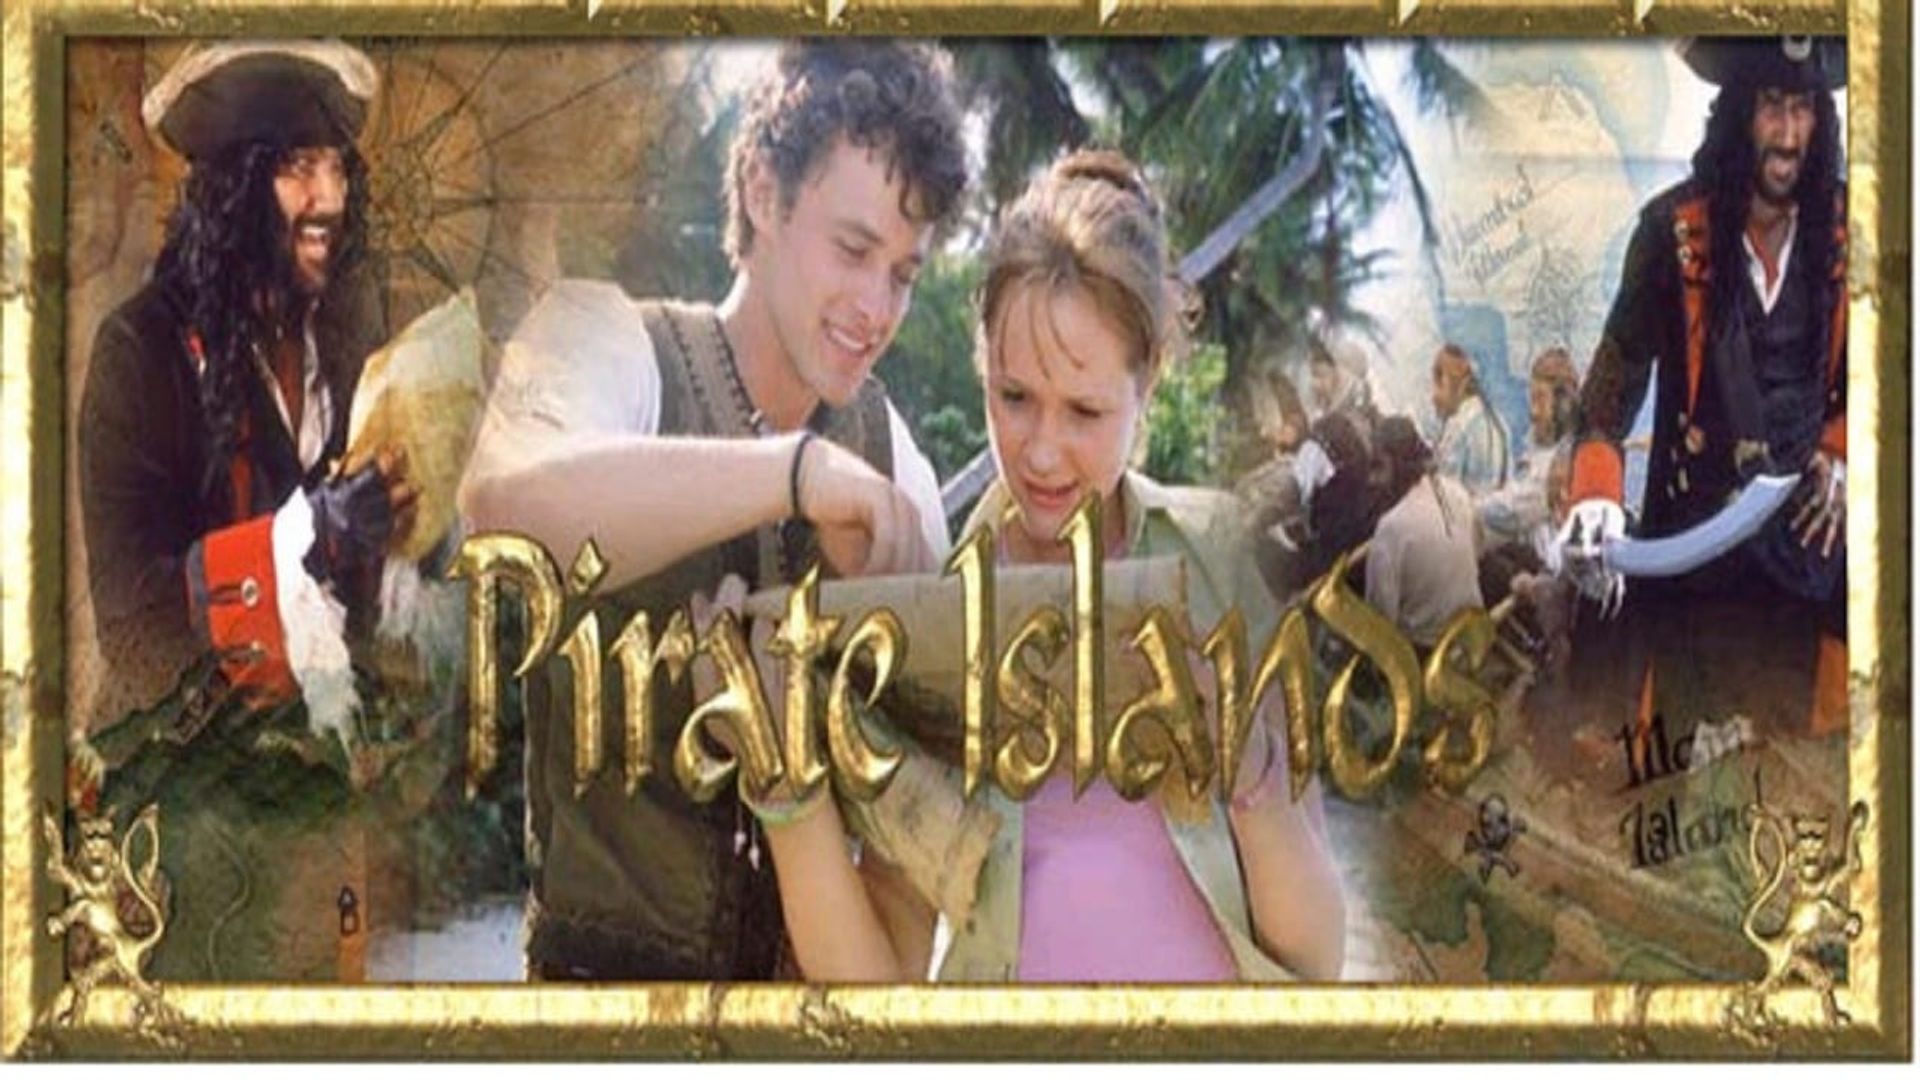 Pirate Islands background